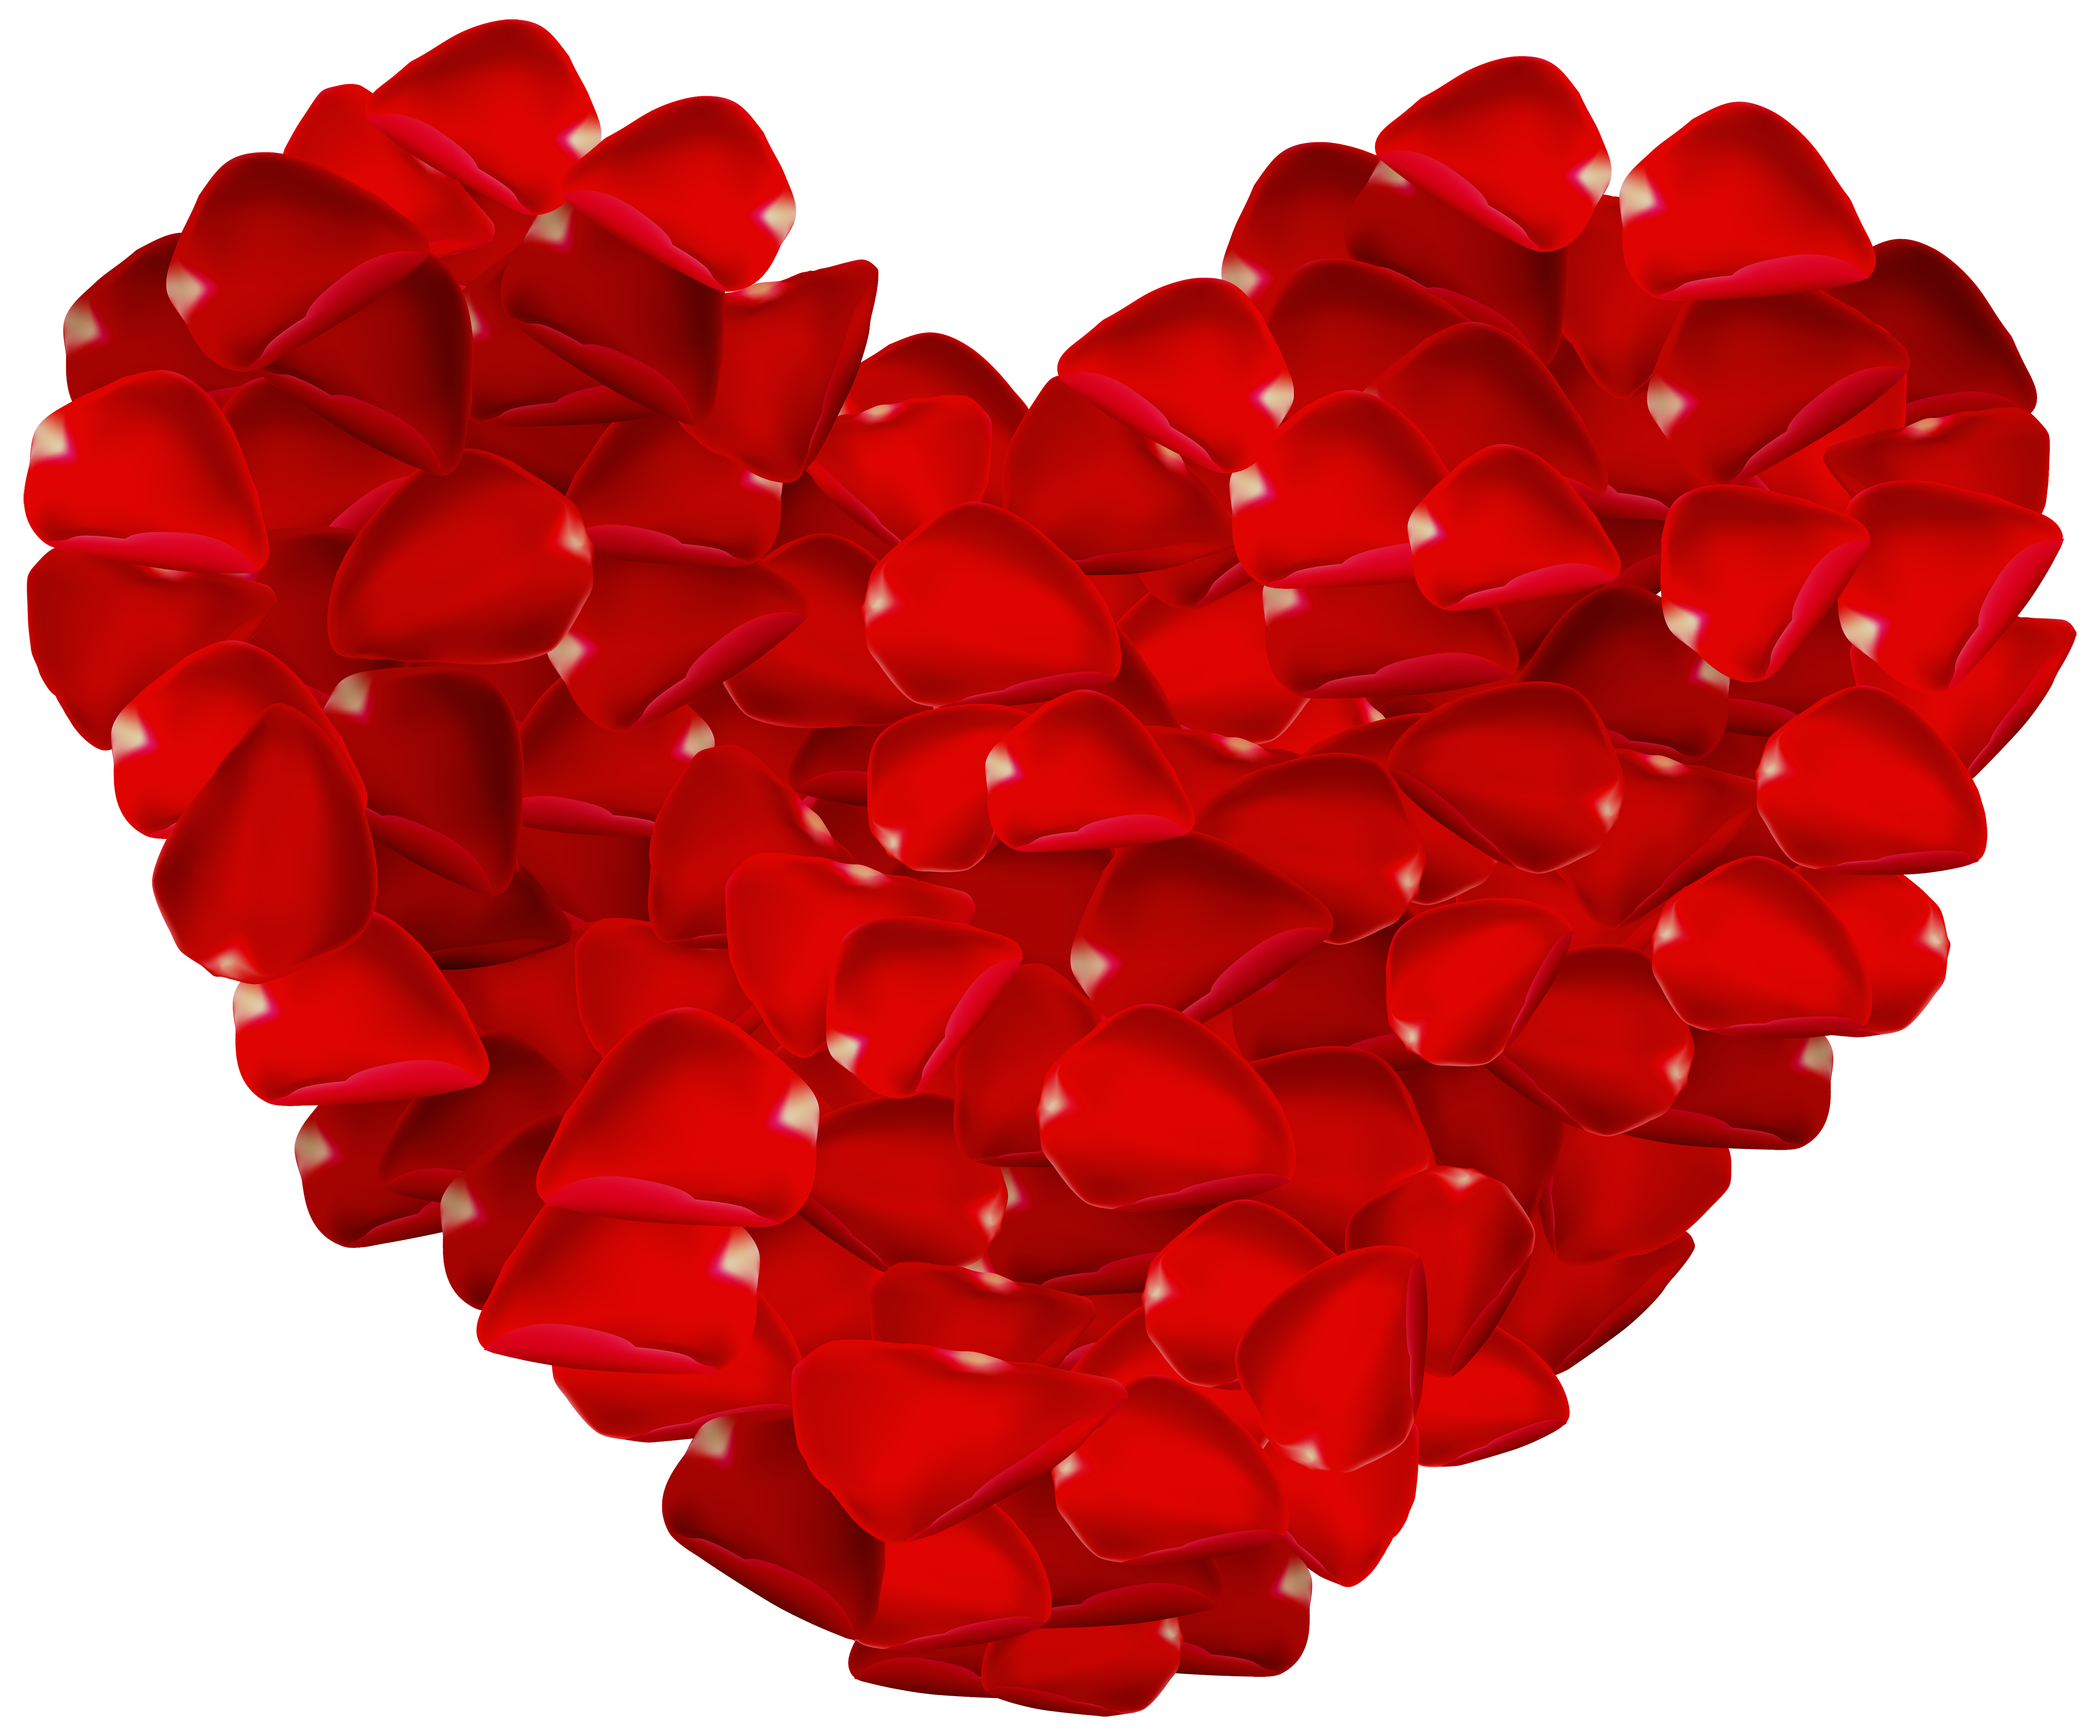 Rose Petals Heart PNG Clipart Image - Best WEB Clipart